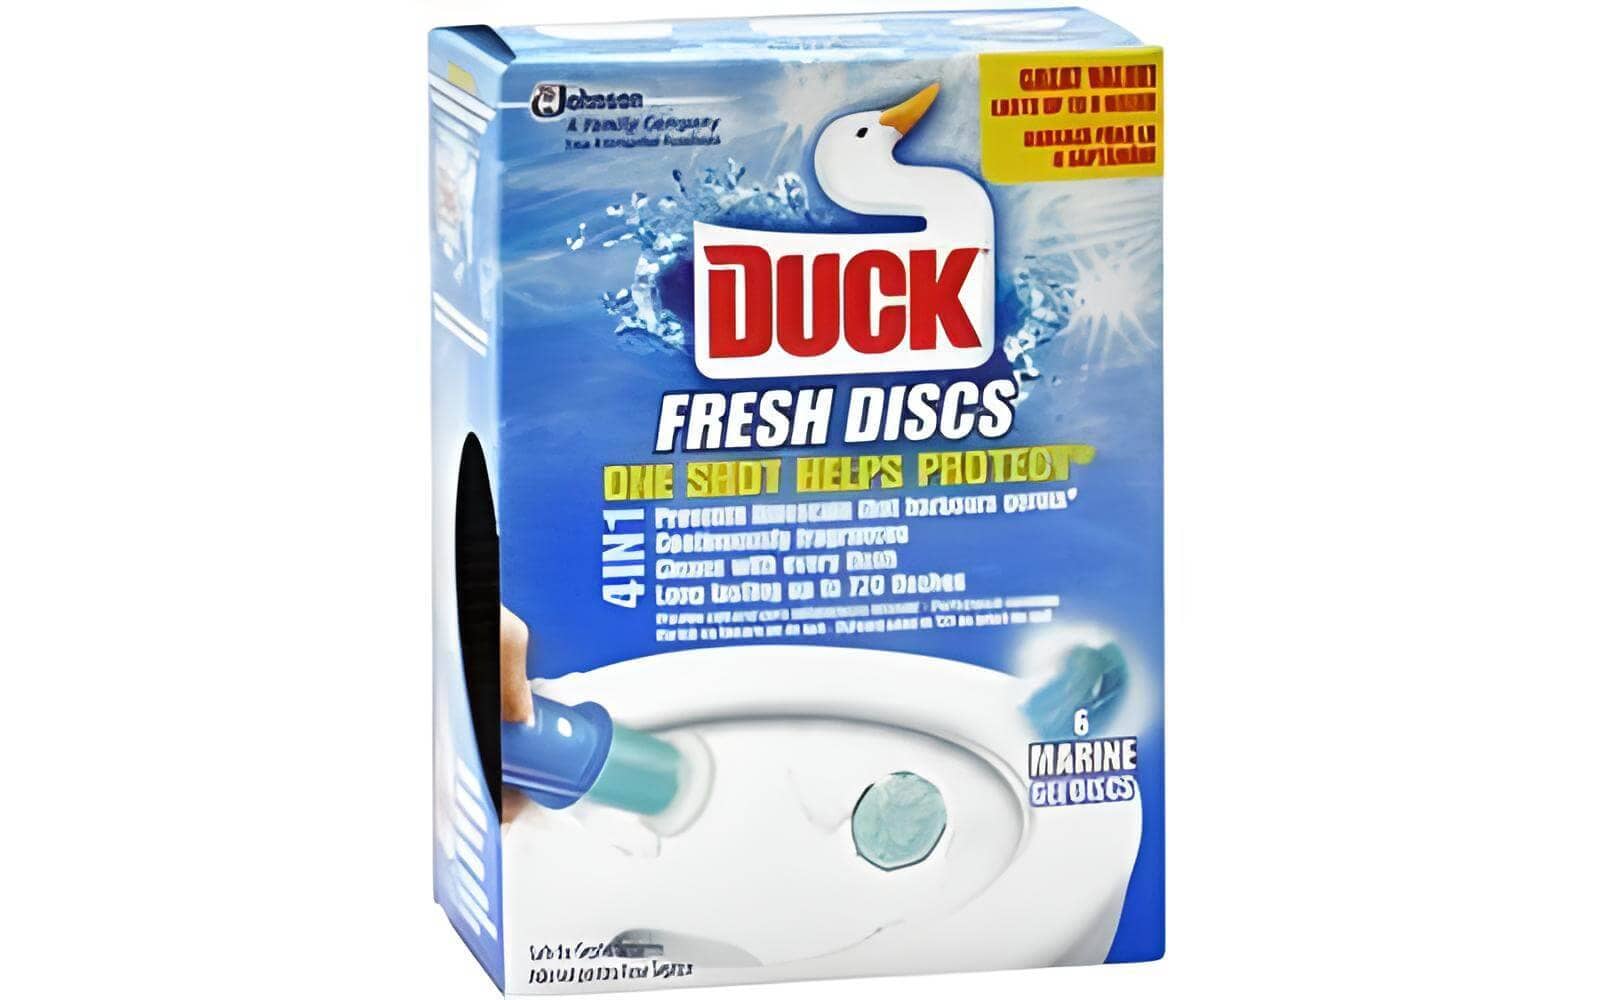 duck fresh discs toilet sanitiser box